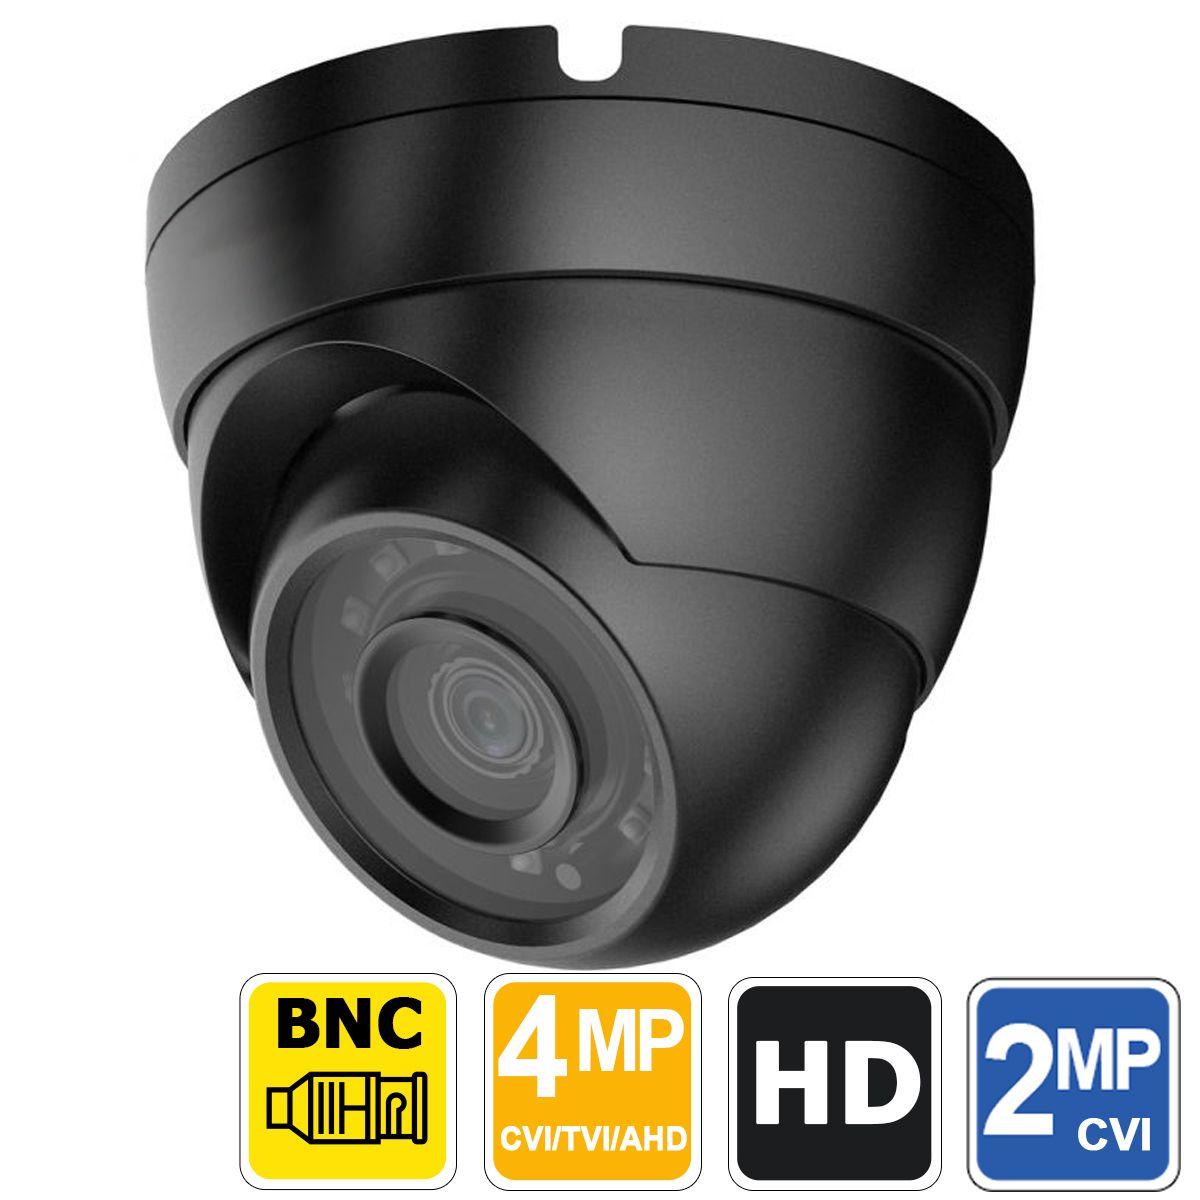 Hikvision DOME CCTV CAMERA 4MP 4IN1 TVI AHD CVI CVBS FULL HD 1440 OUTDOOR NIGHT VISION 